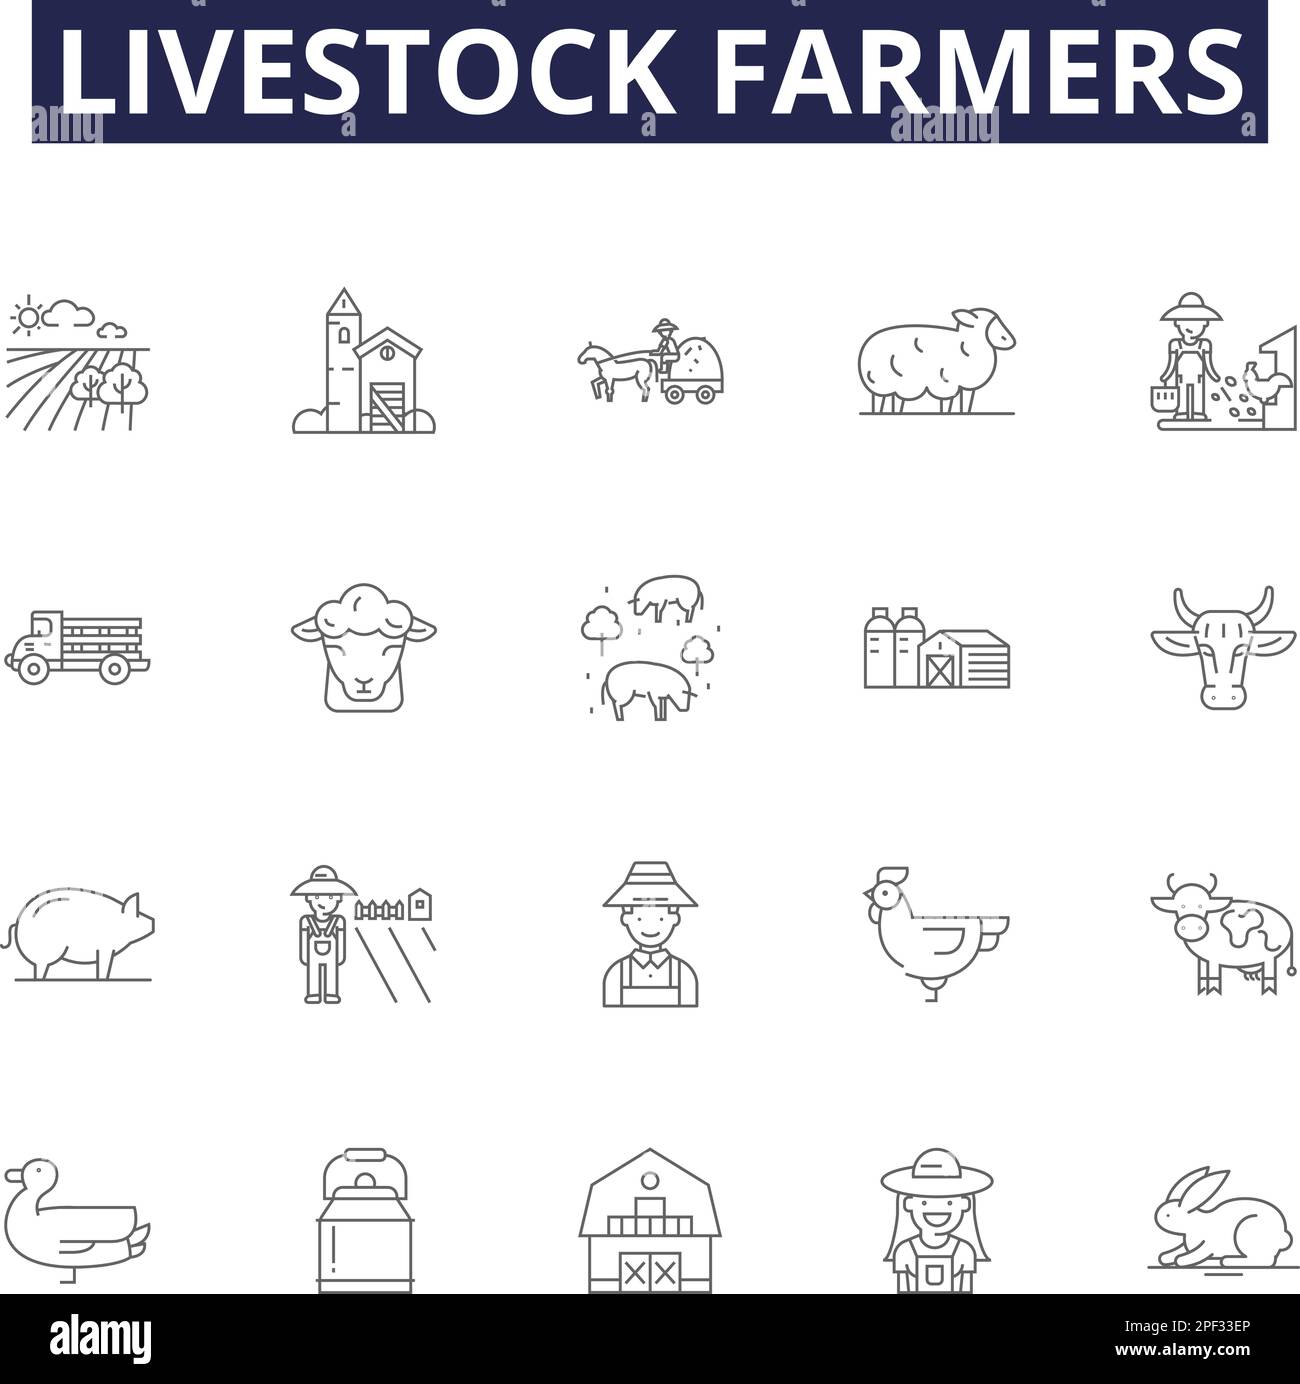 Livestock farmers line vector icons and signs. husbandry, herdsman, agrarians, stockbreeders, custodians, raisers, shepherds, pastoralists outline Stock Vector